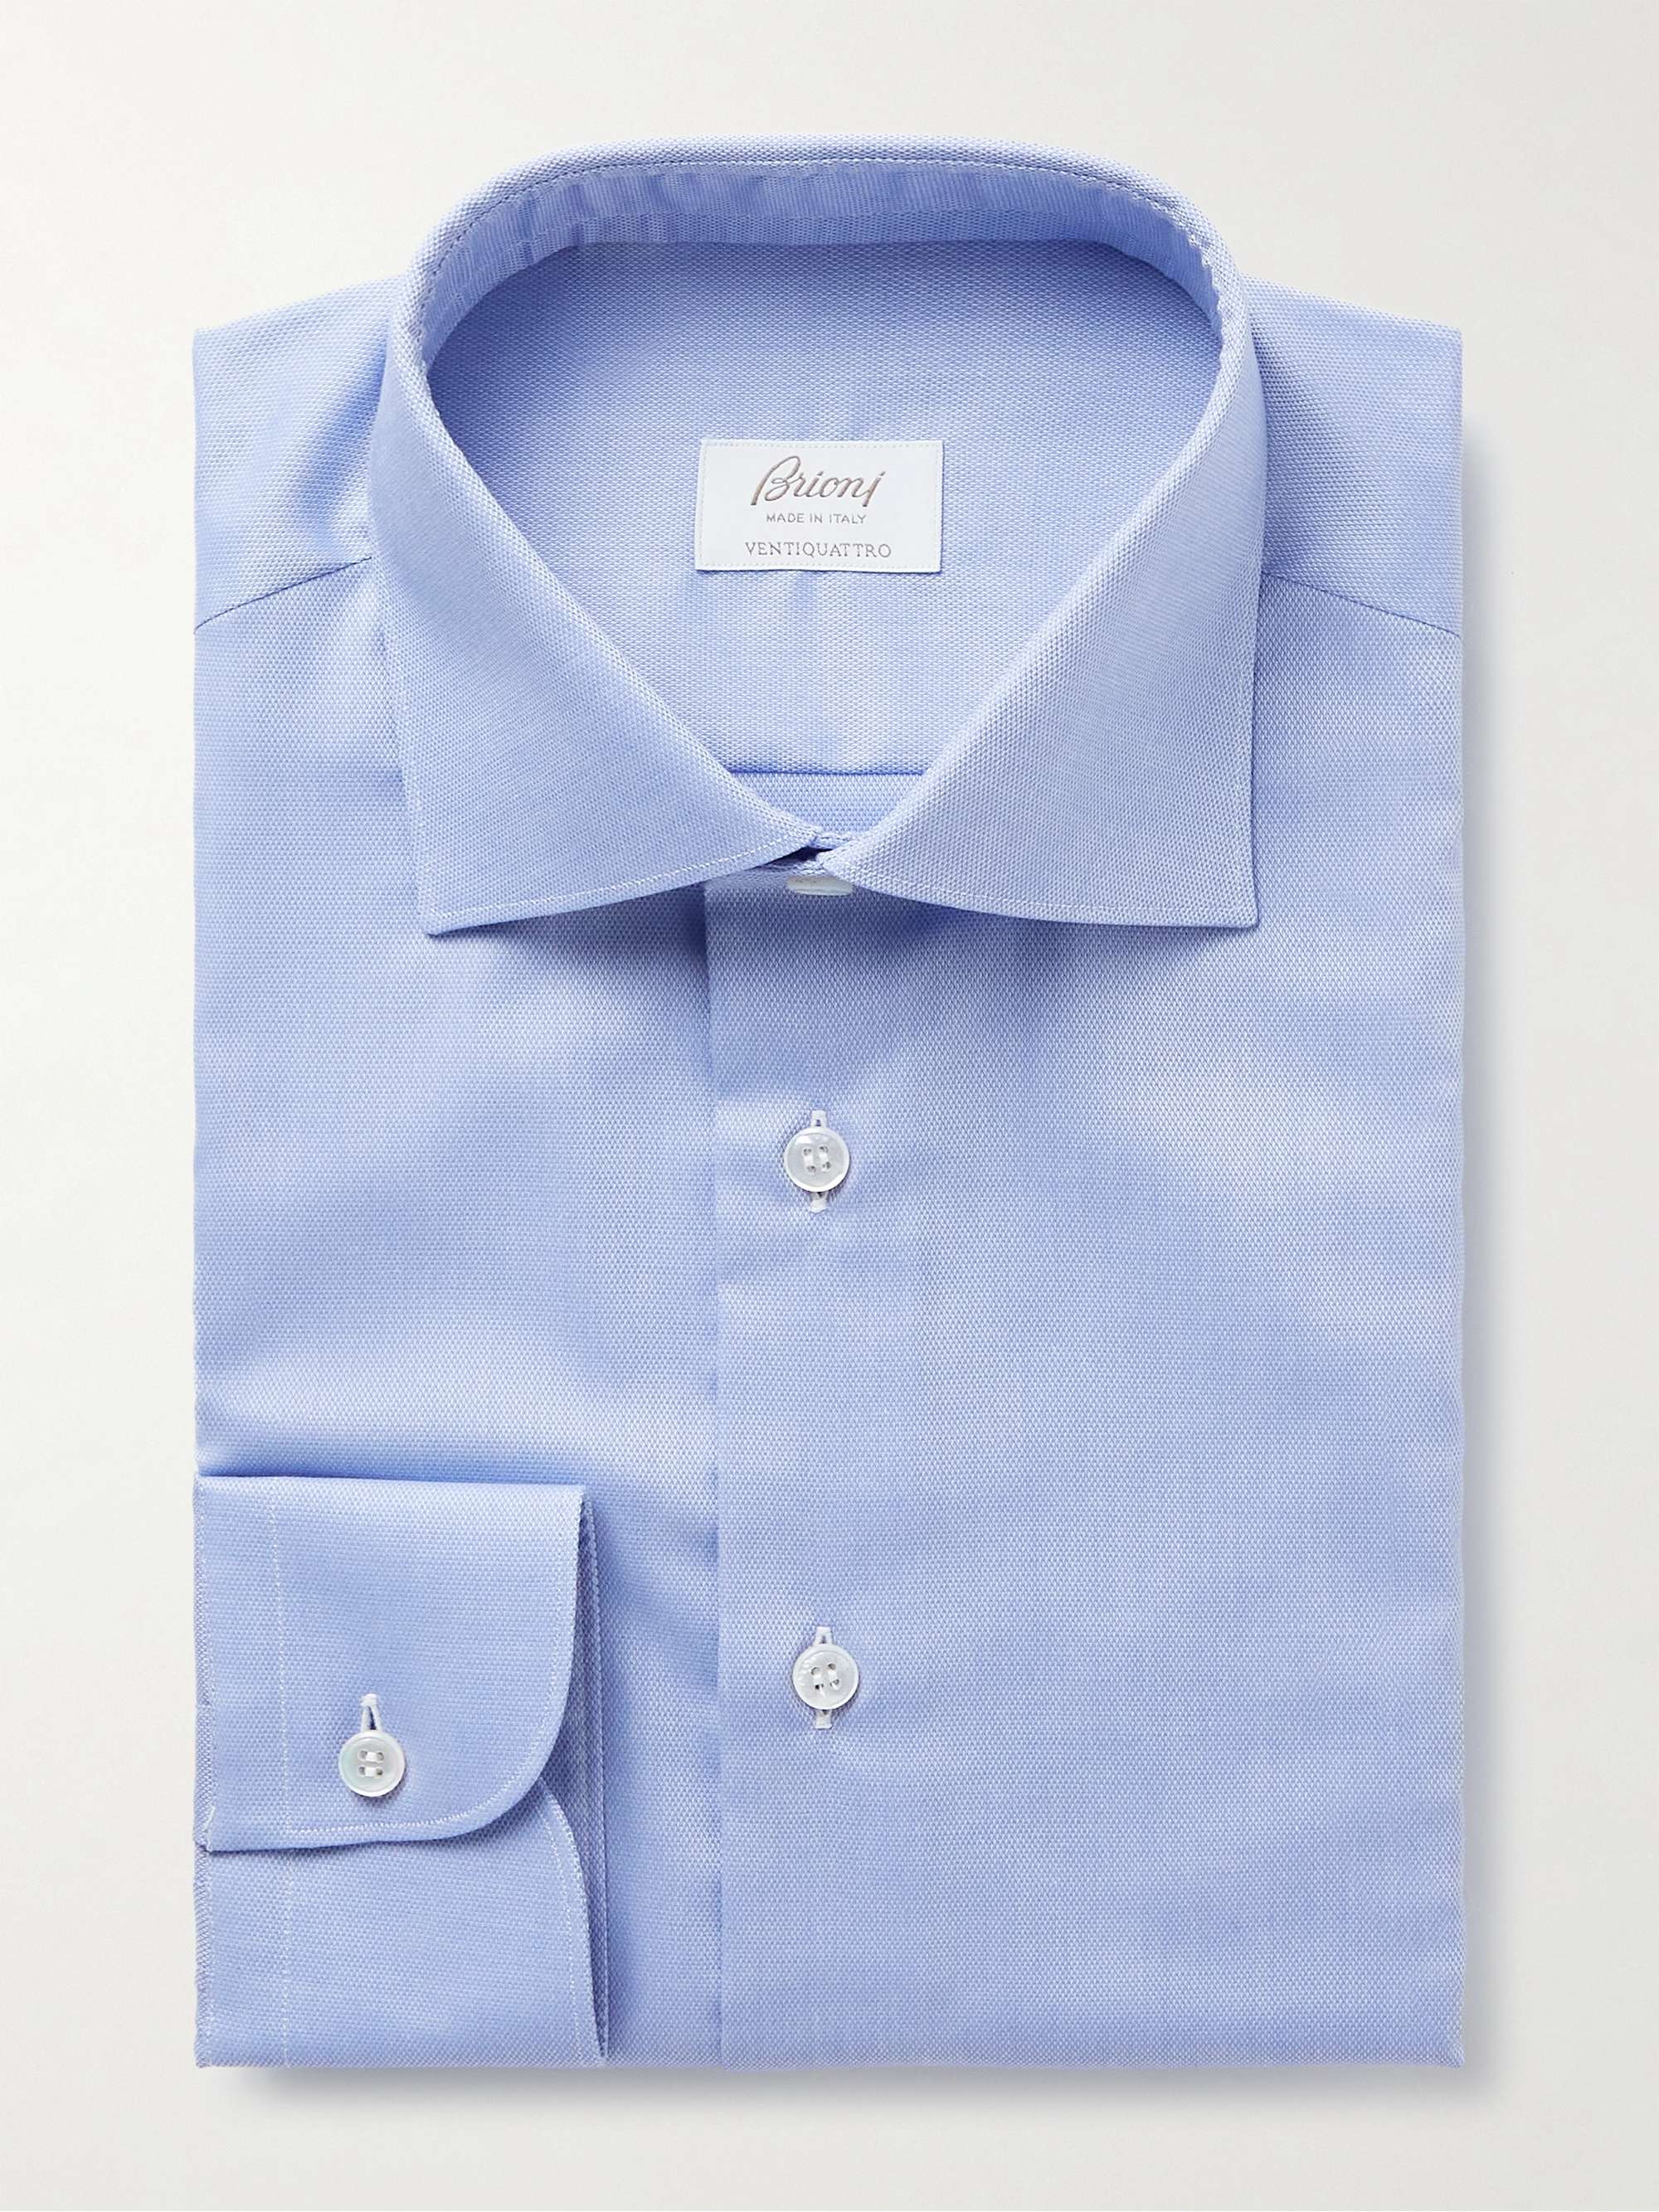 BRIONI Ventiquattro Cutaway-Collar Cotton Shirt